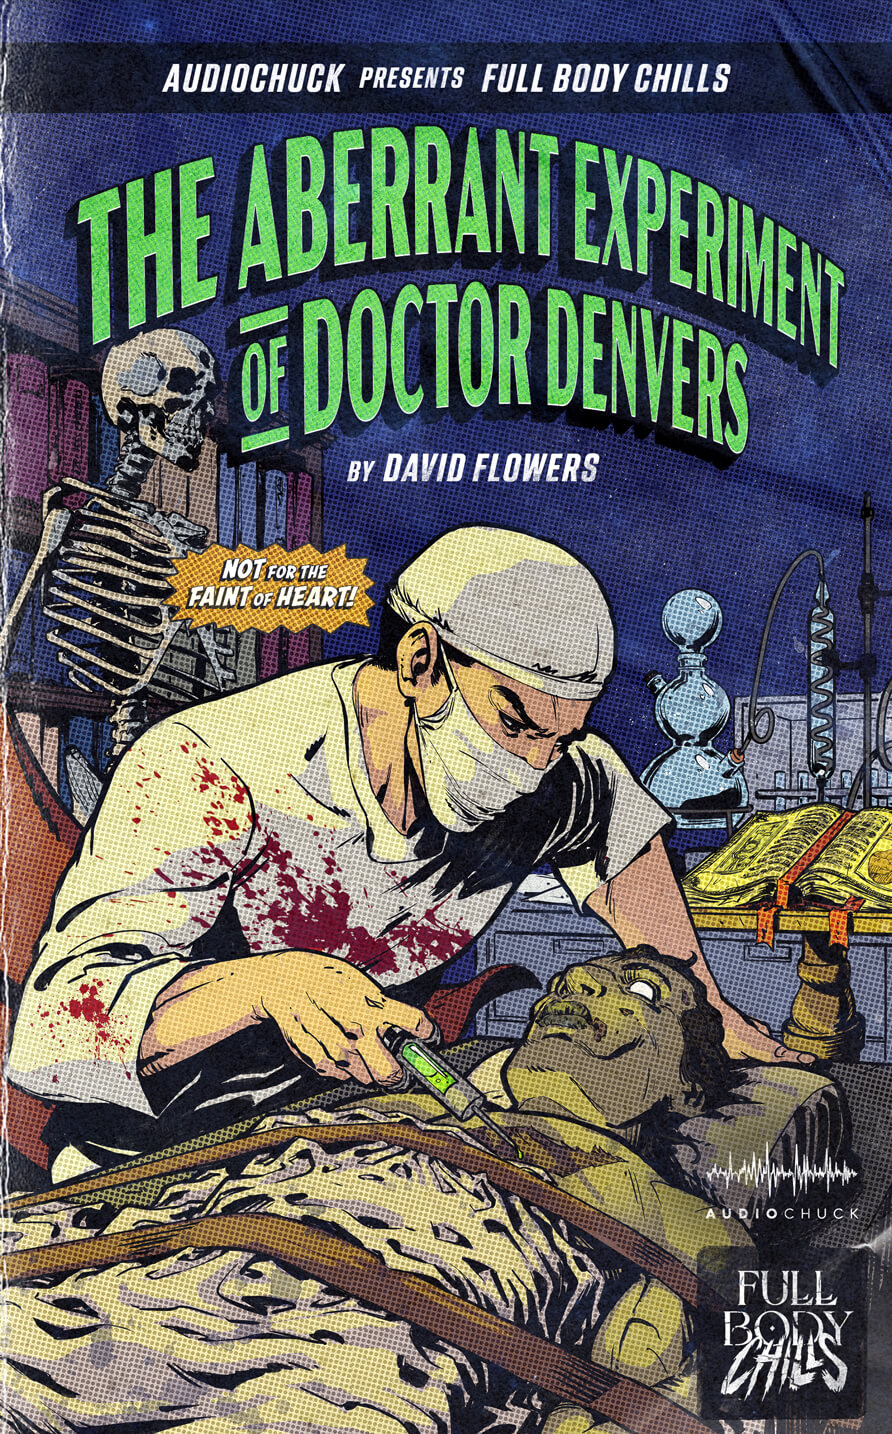 The Aberrant Experiment of Doctor Denvers Artwork.